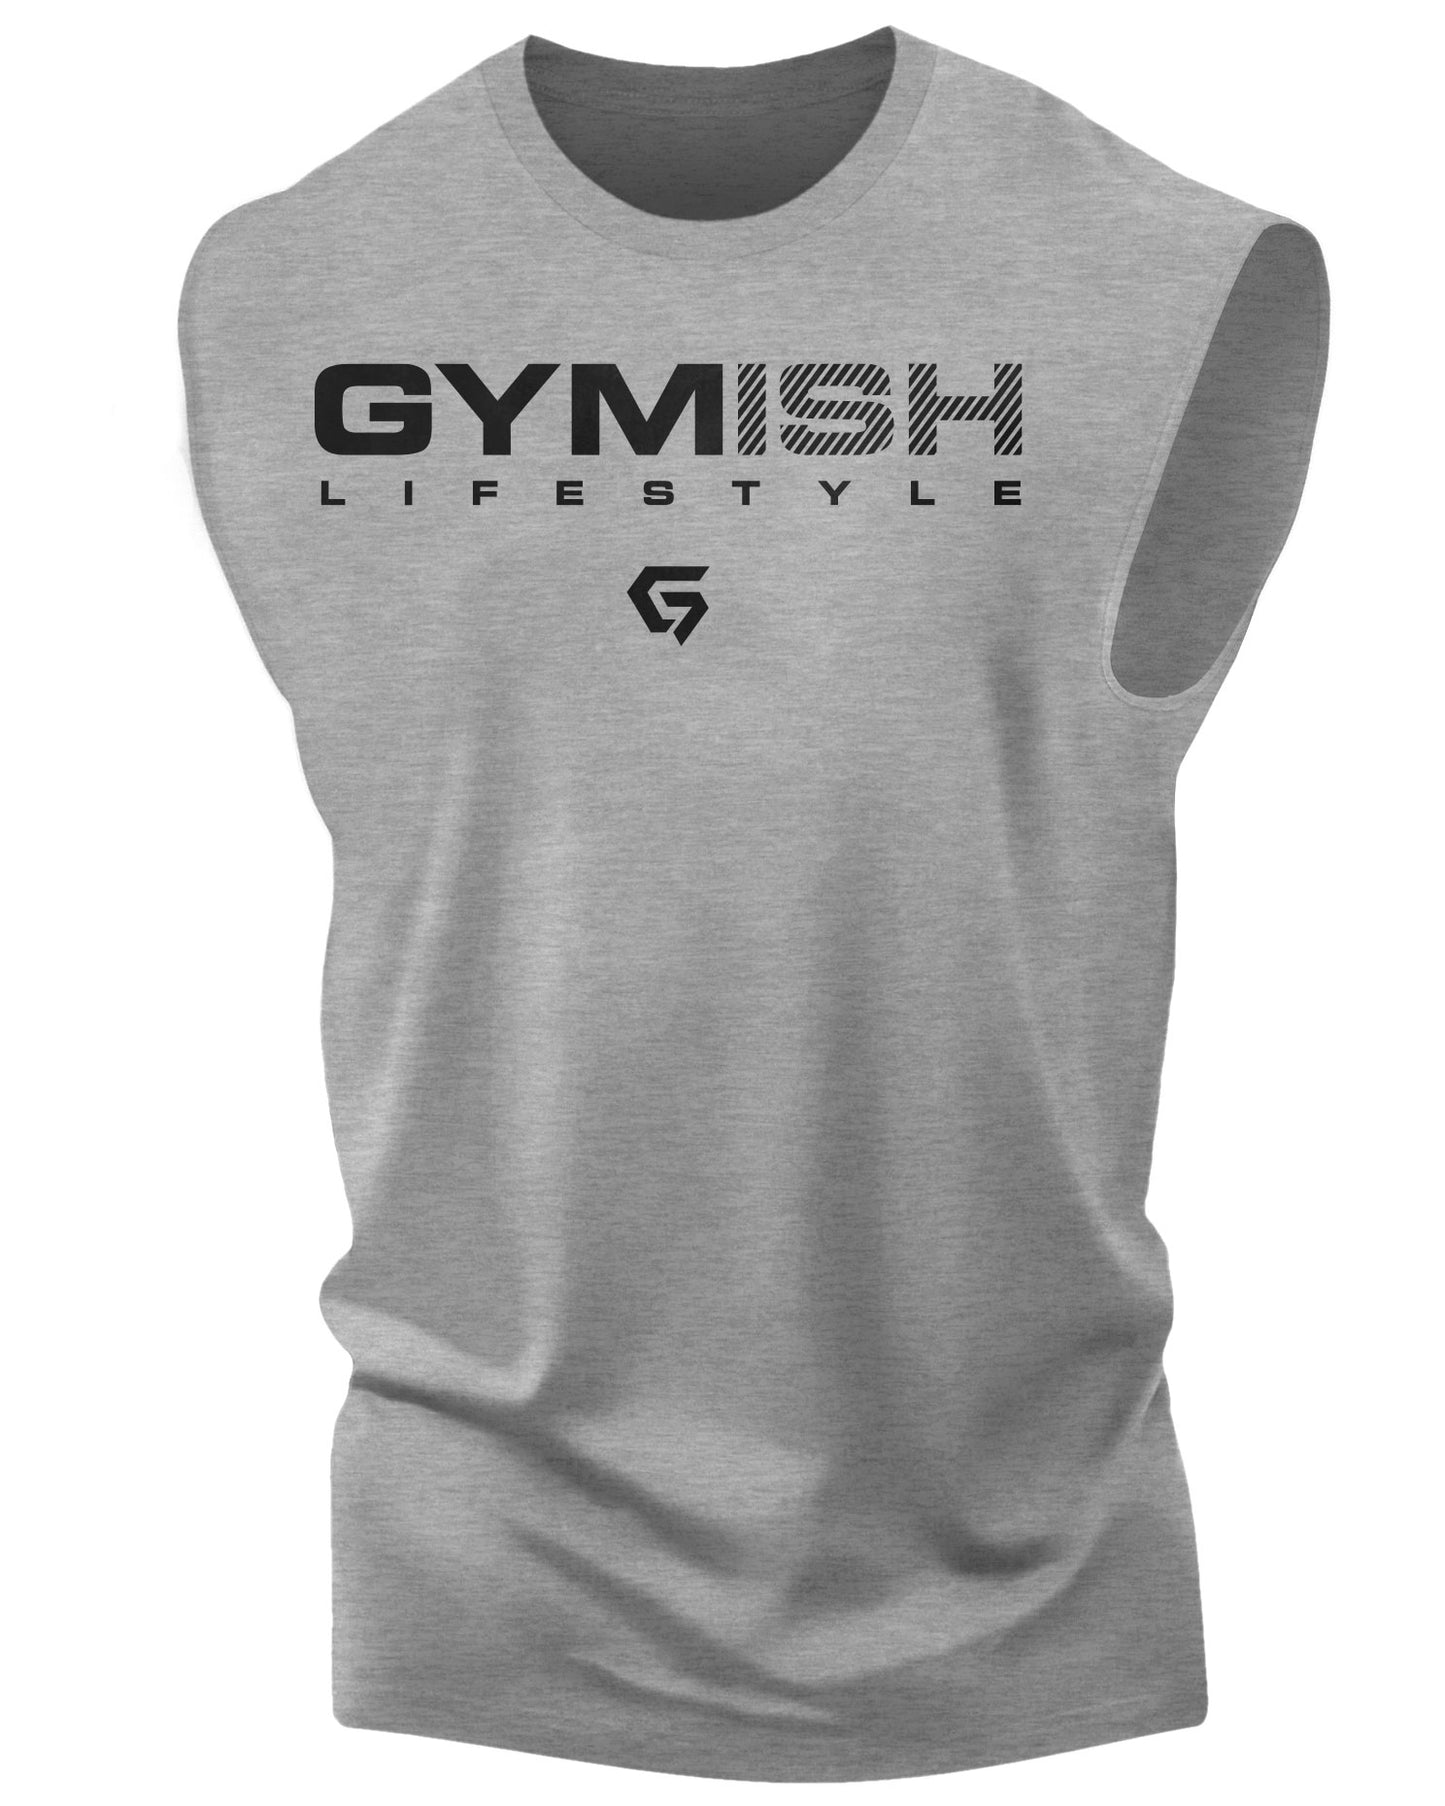 Gymish Lifestyle Muscle Tank Top, Sleeveless, Workout Shirt, Lifting S